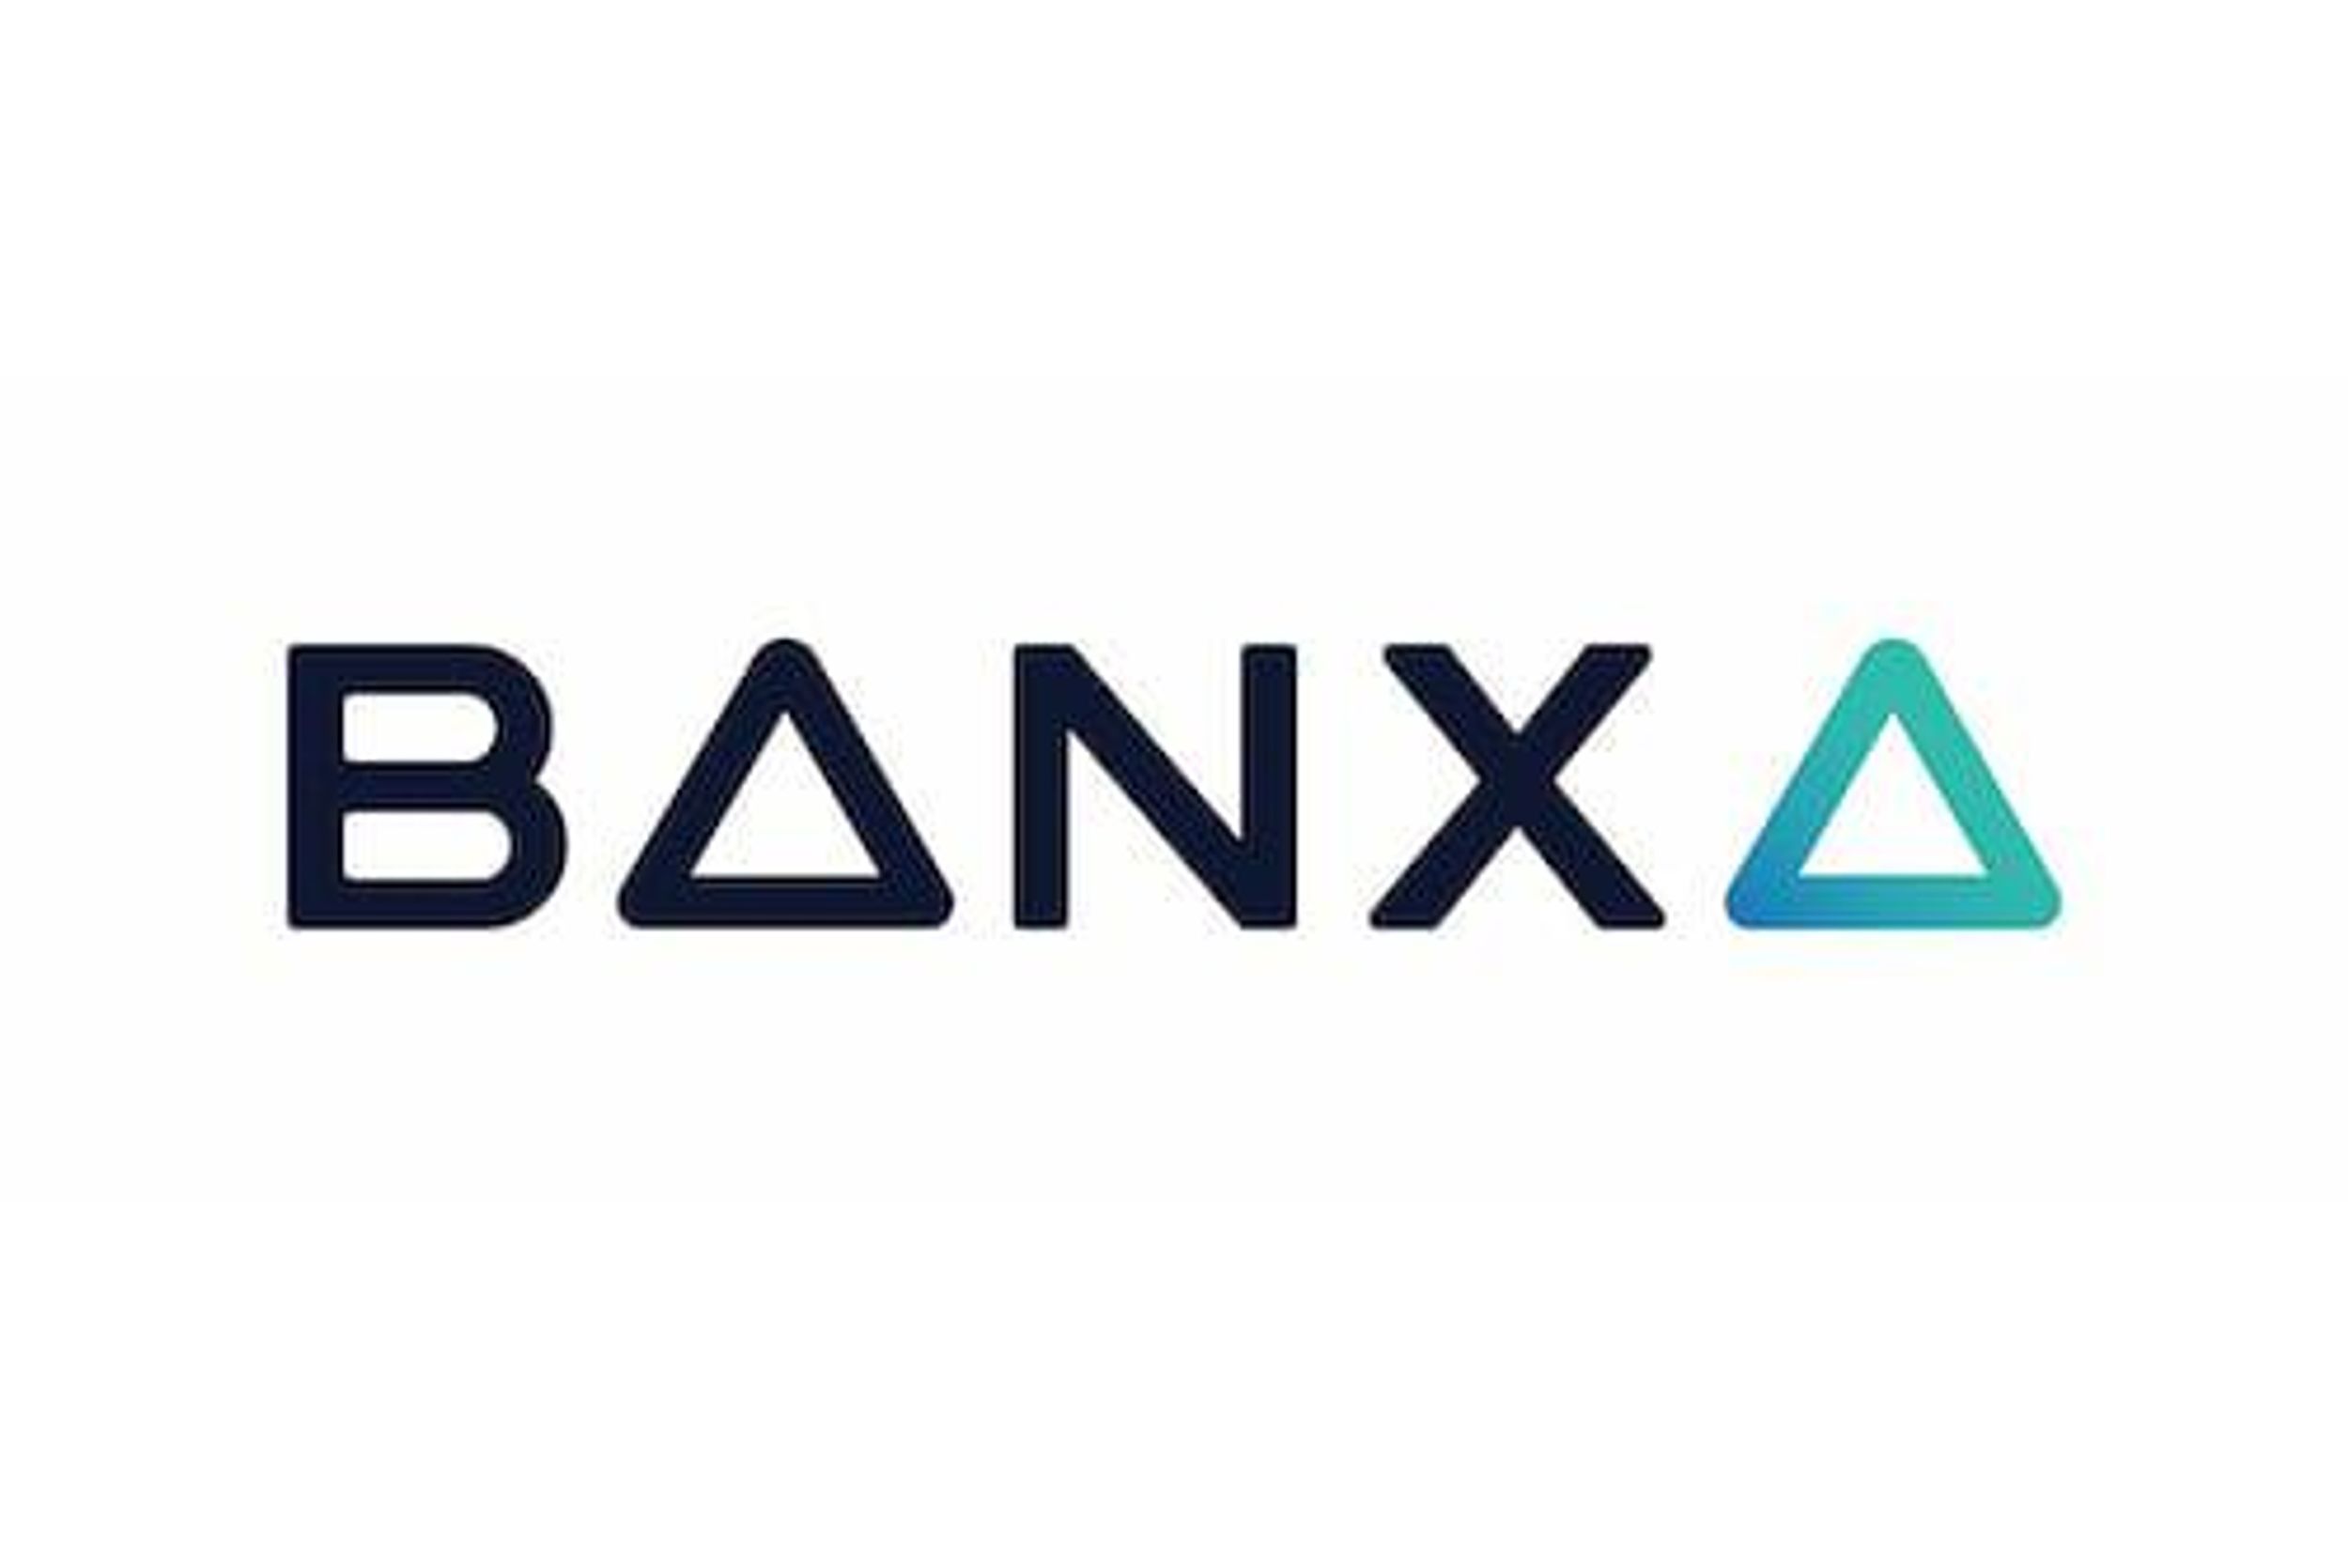 Banxa Records 71% YOY Increase for March Quarter 2022